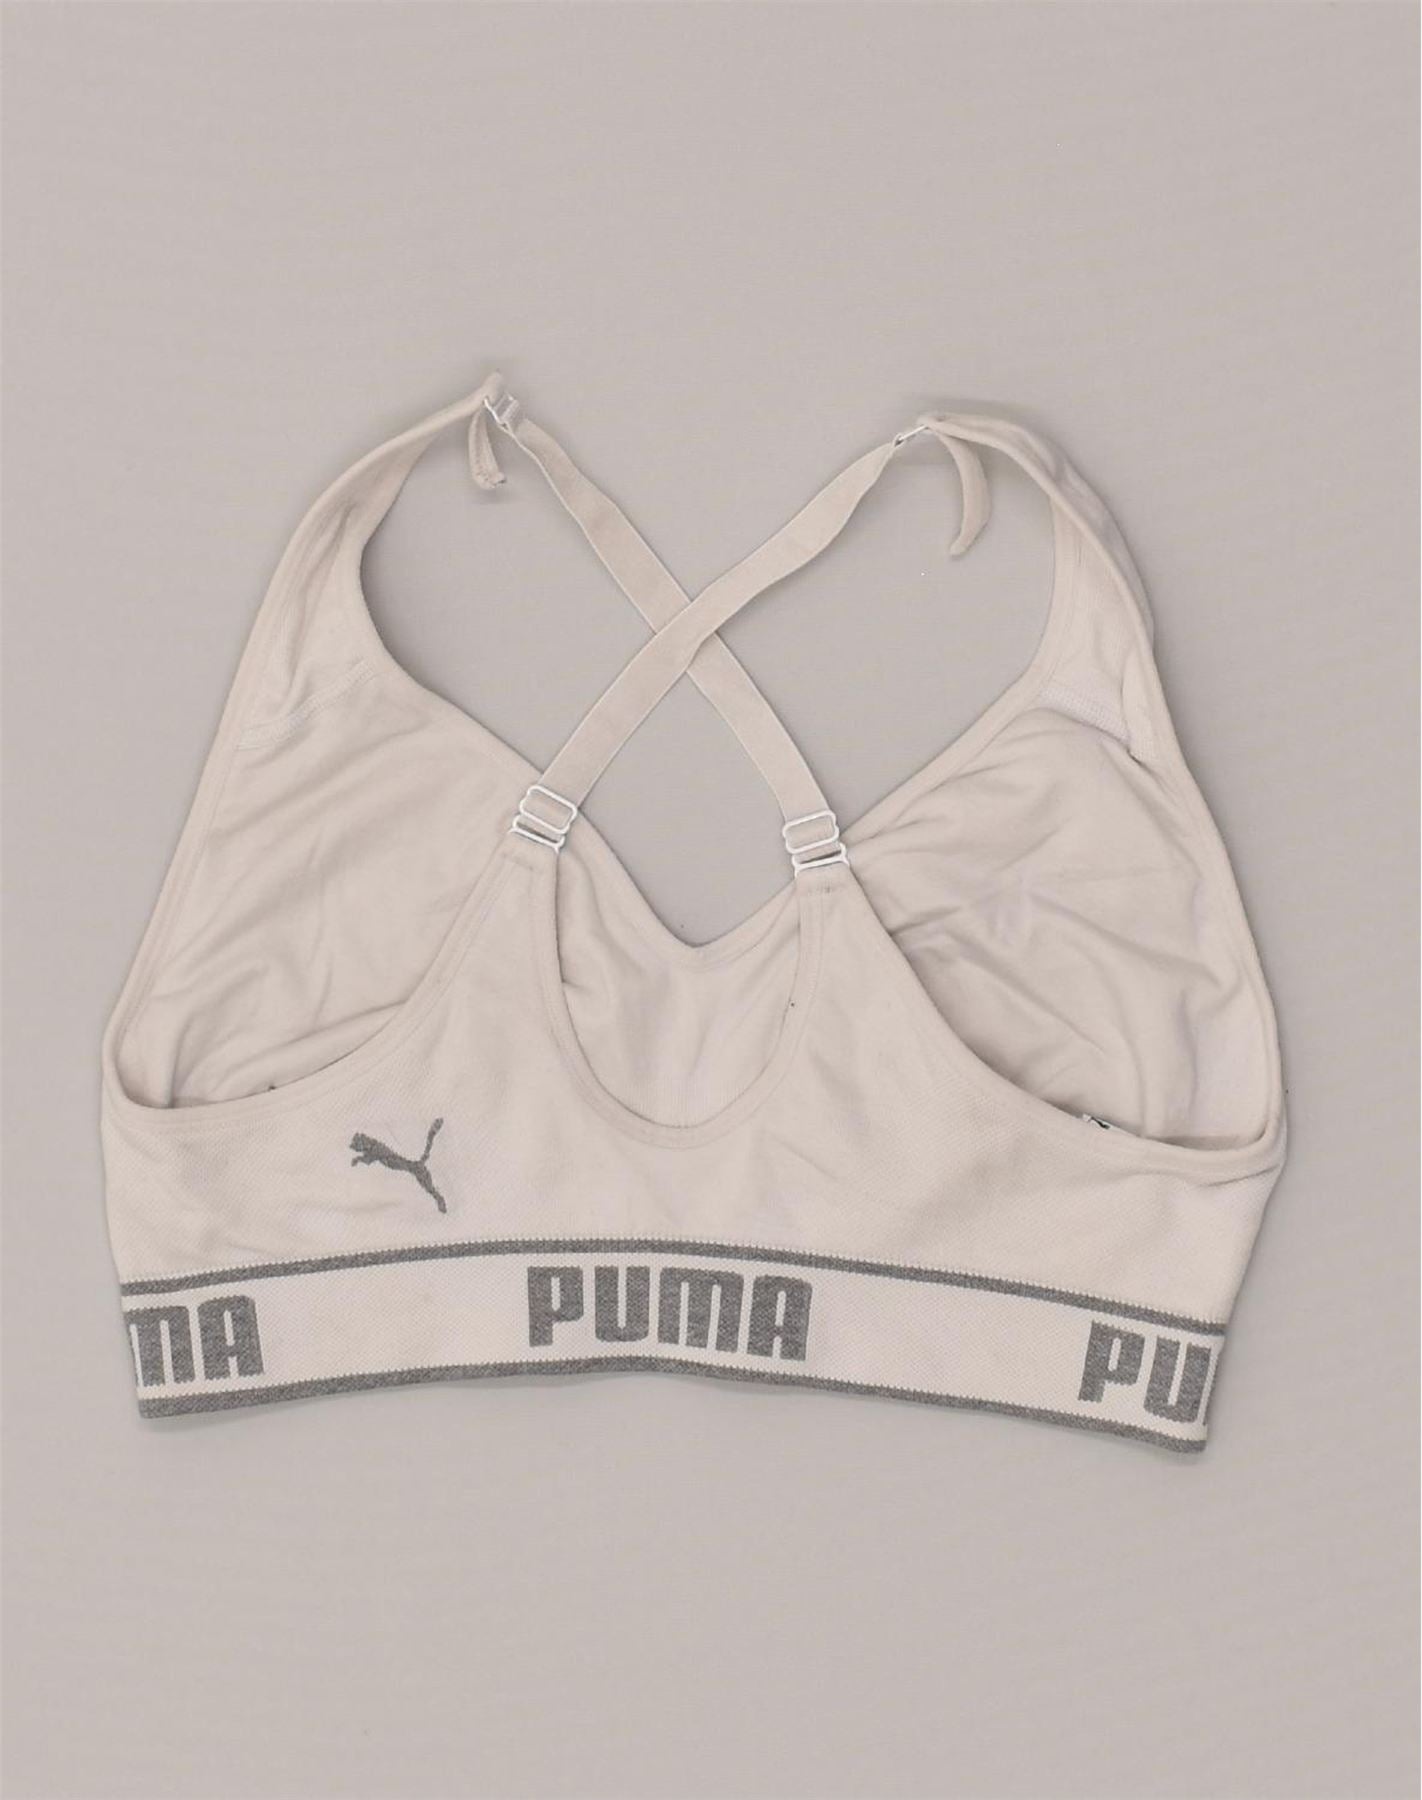 PUMA Womens Sport Bra Top UK 14 Large Grey Nylon